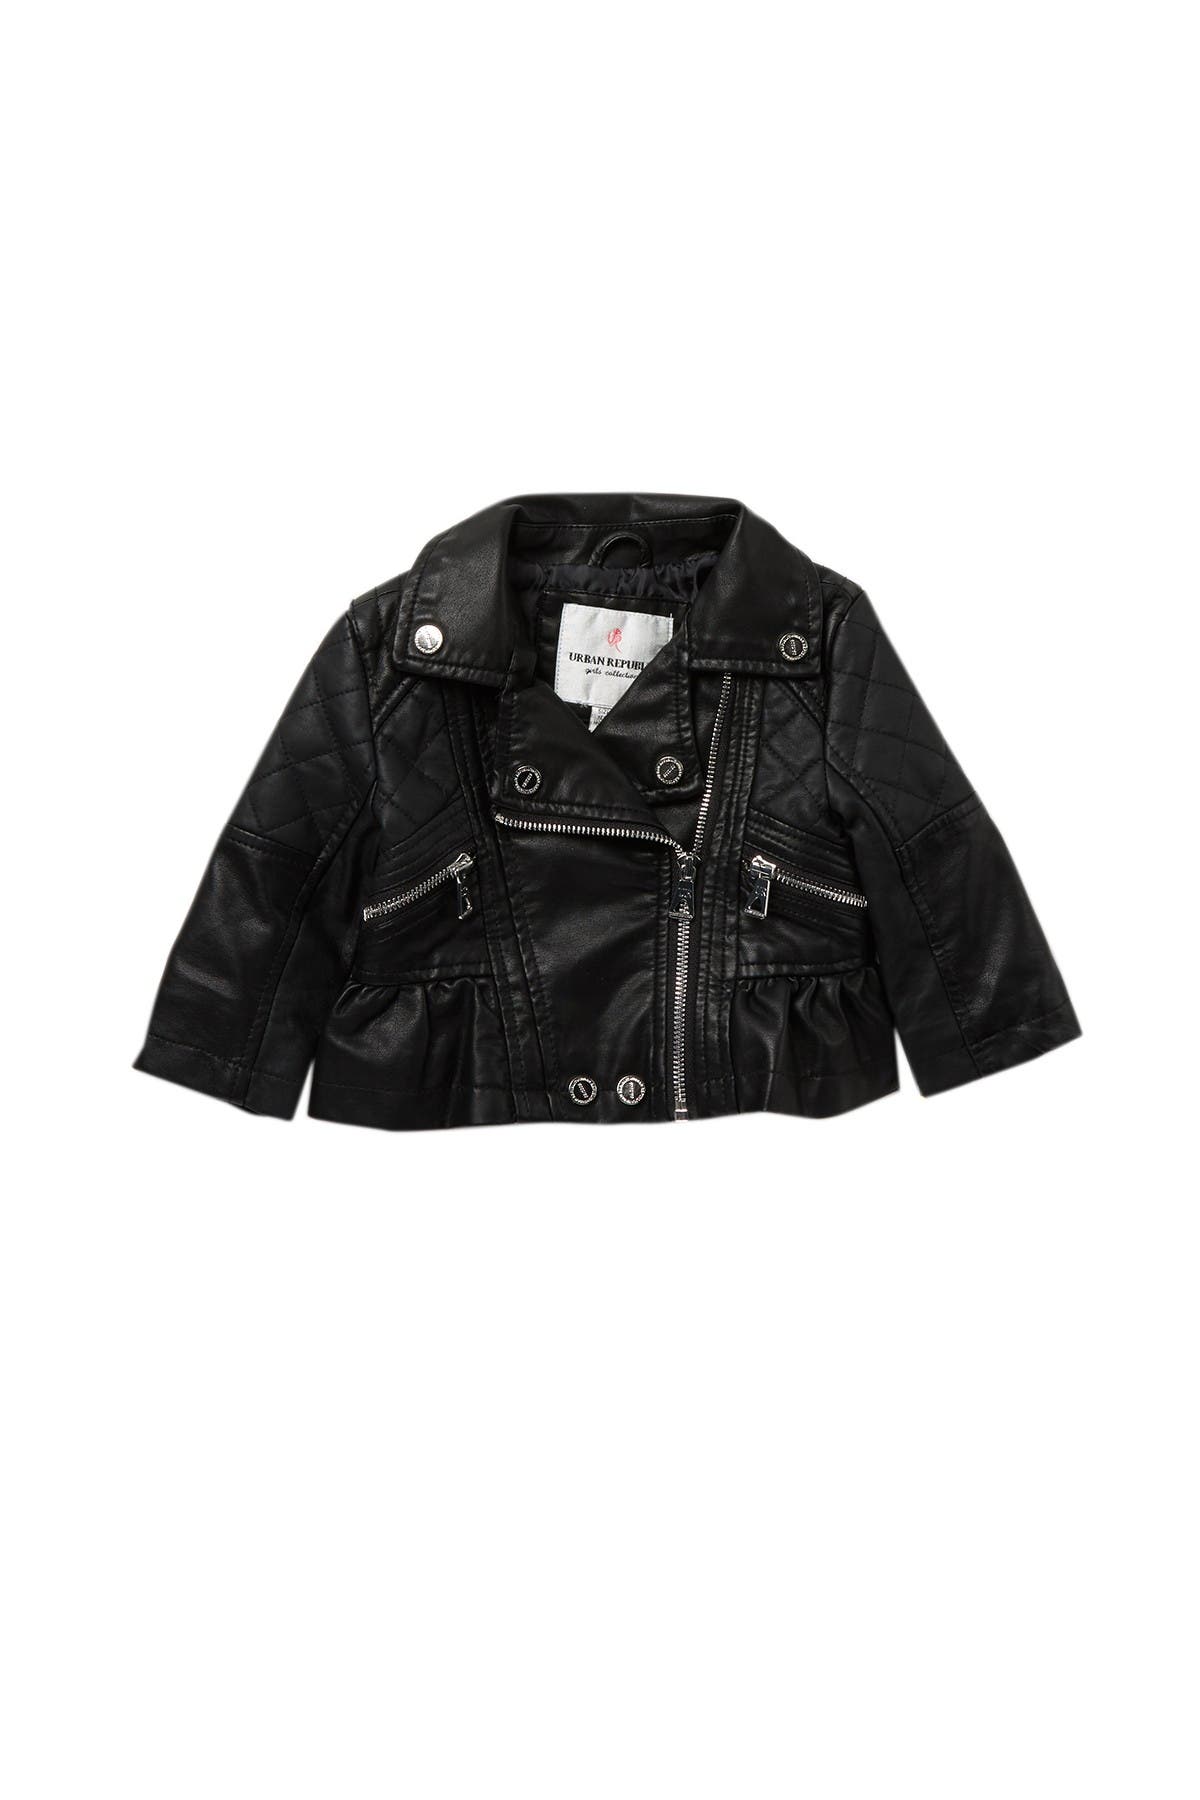 urban republic baby leather jacket